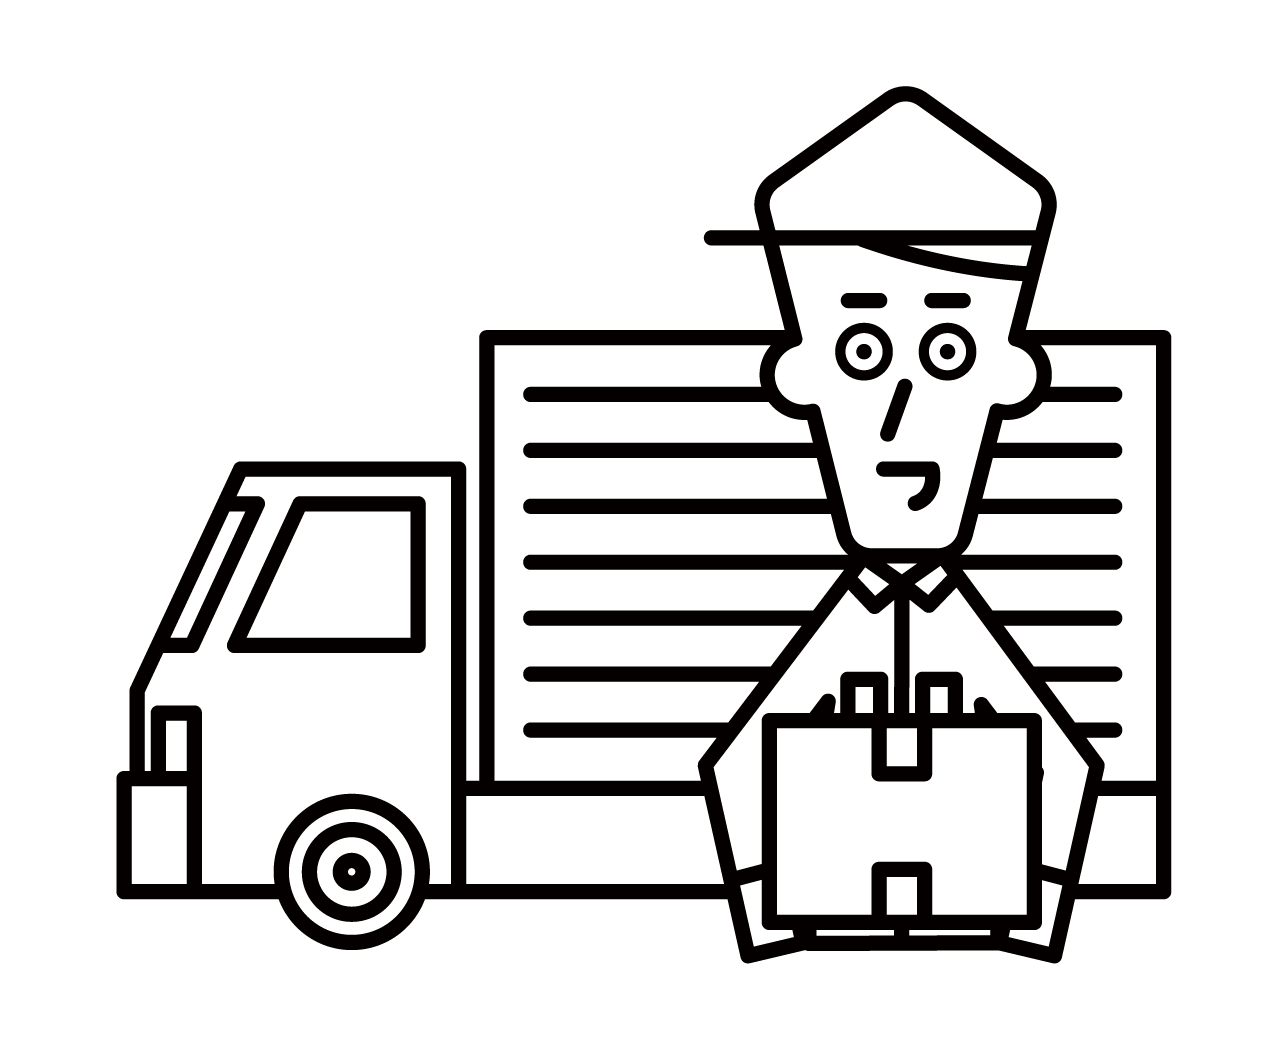 Truck Driver (Male) Illustration